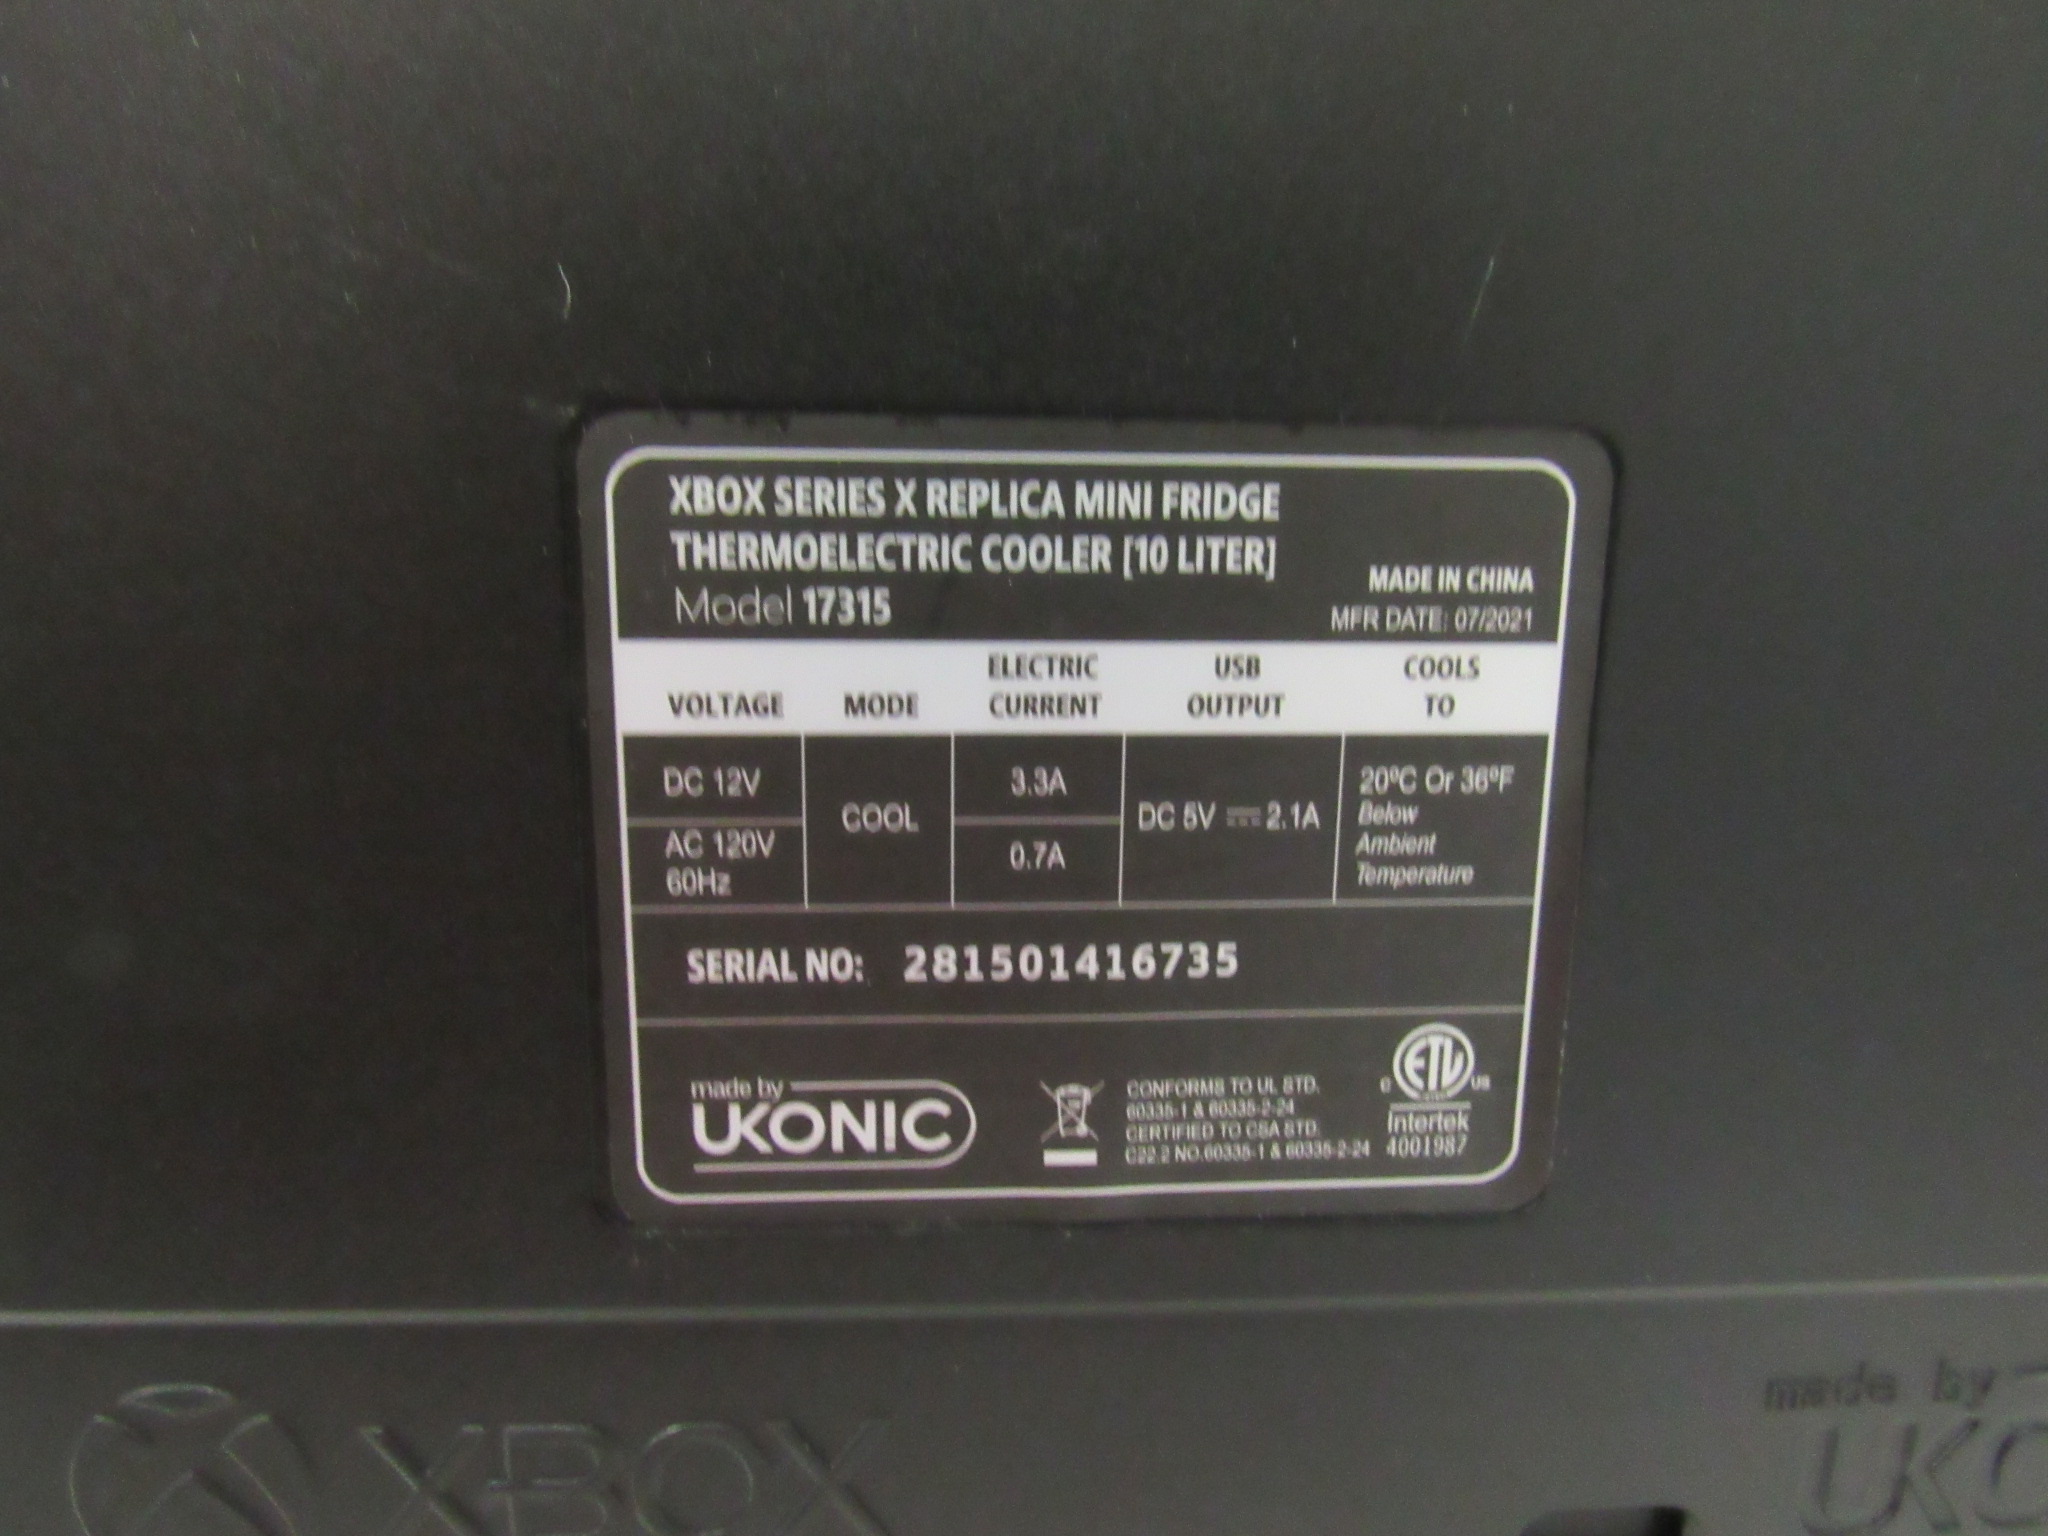 XBOX Series X Replica 8 Can Mini Fridge (Thermoelectric Cooler